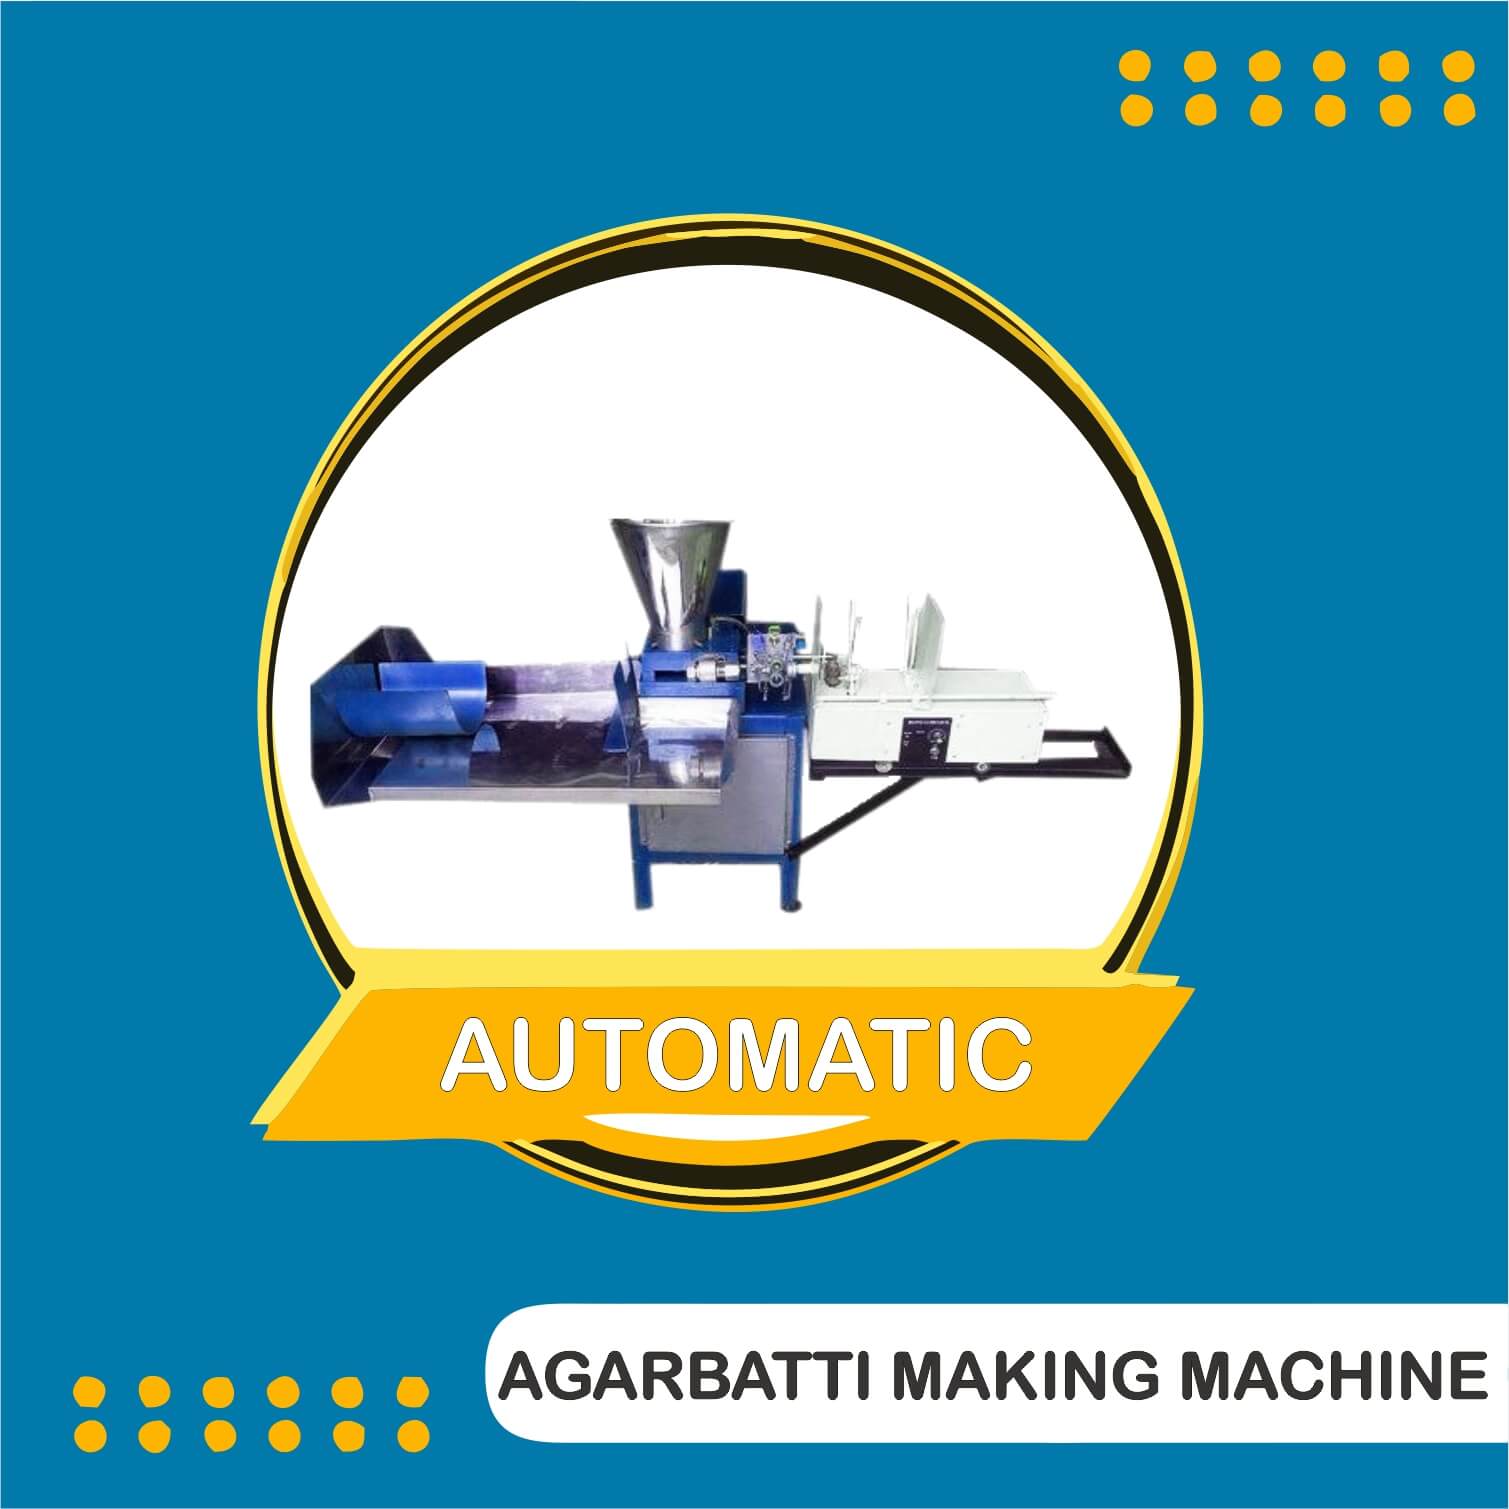 agarbatti making machine in bhopal